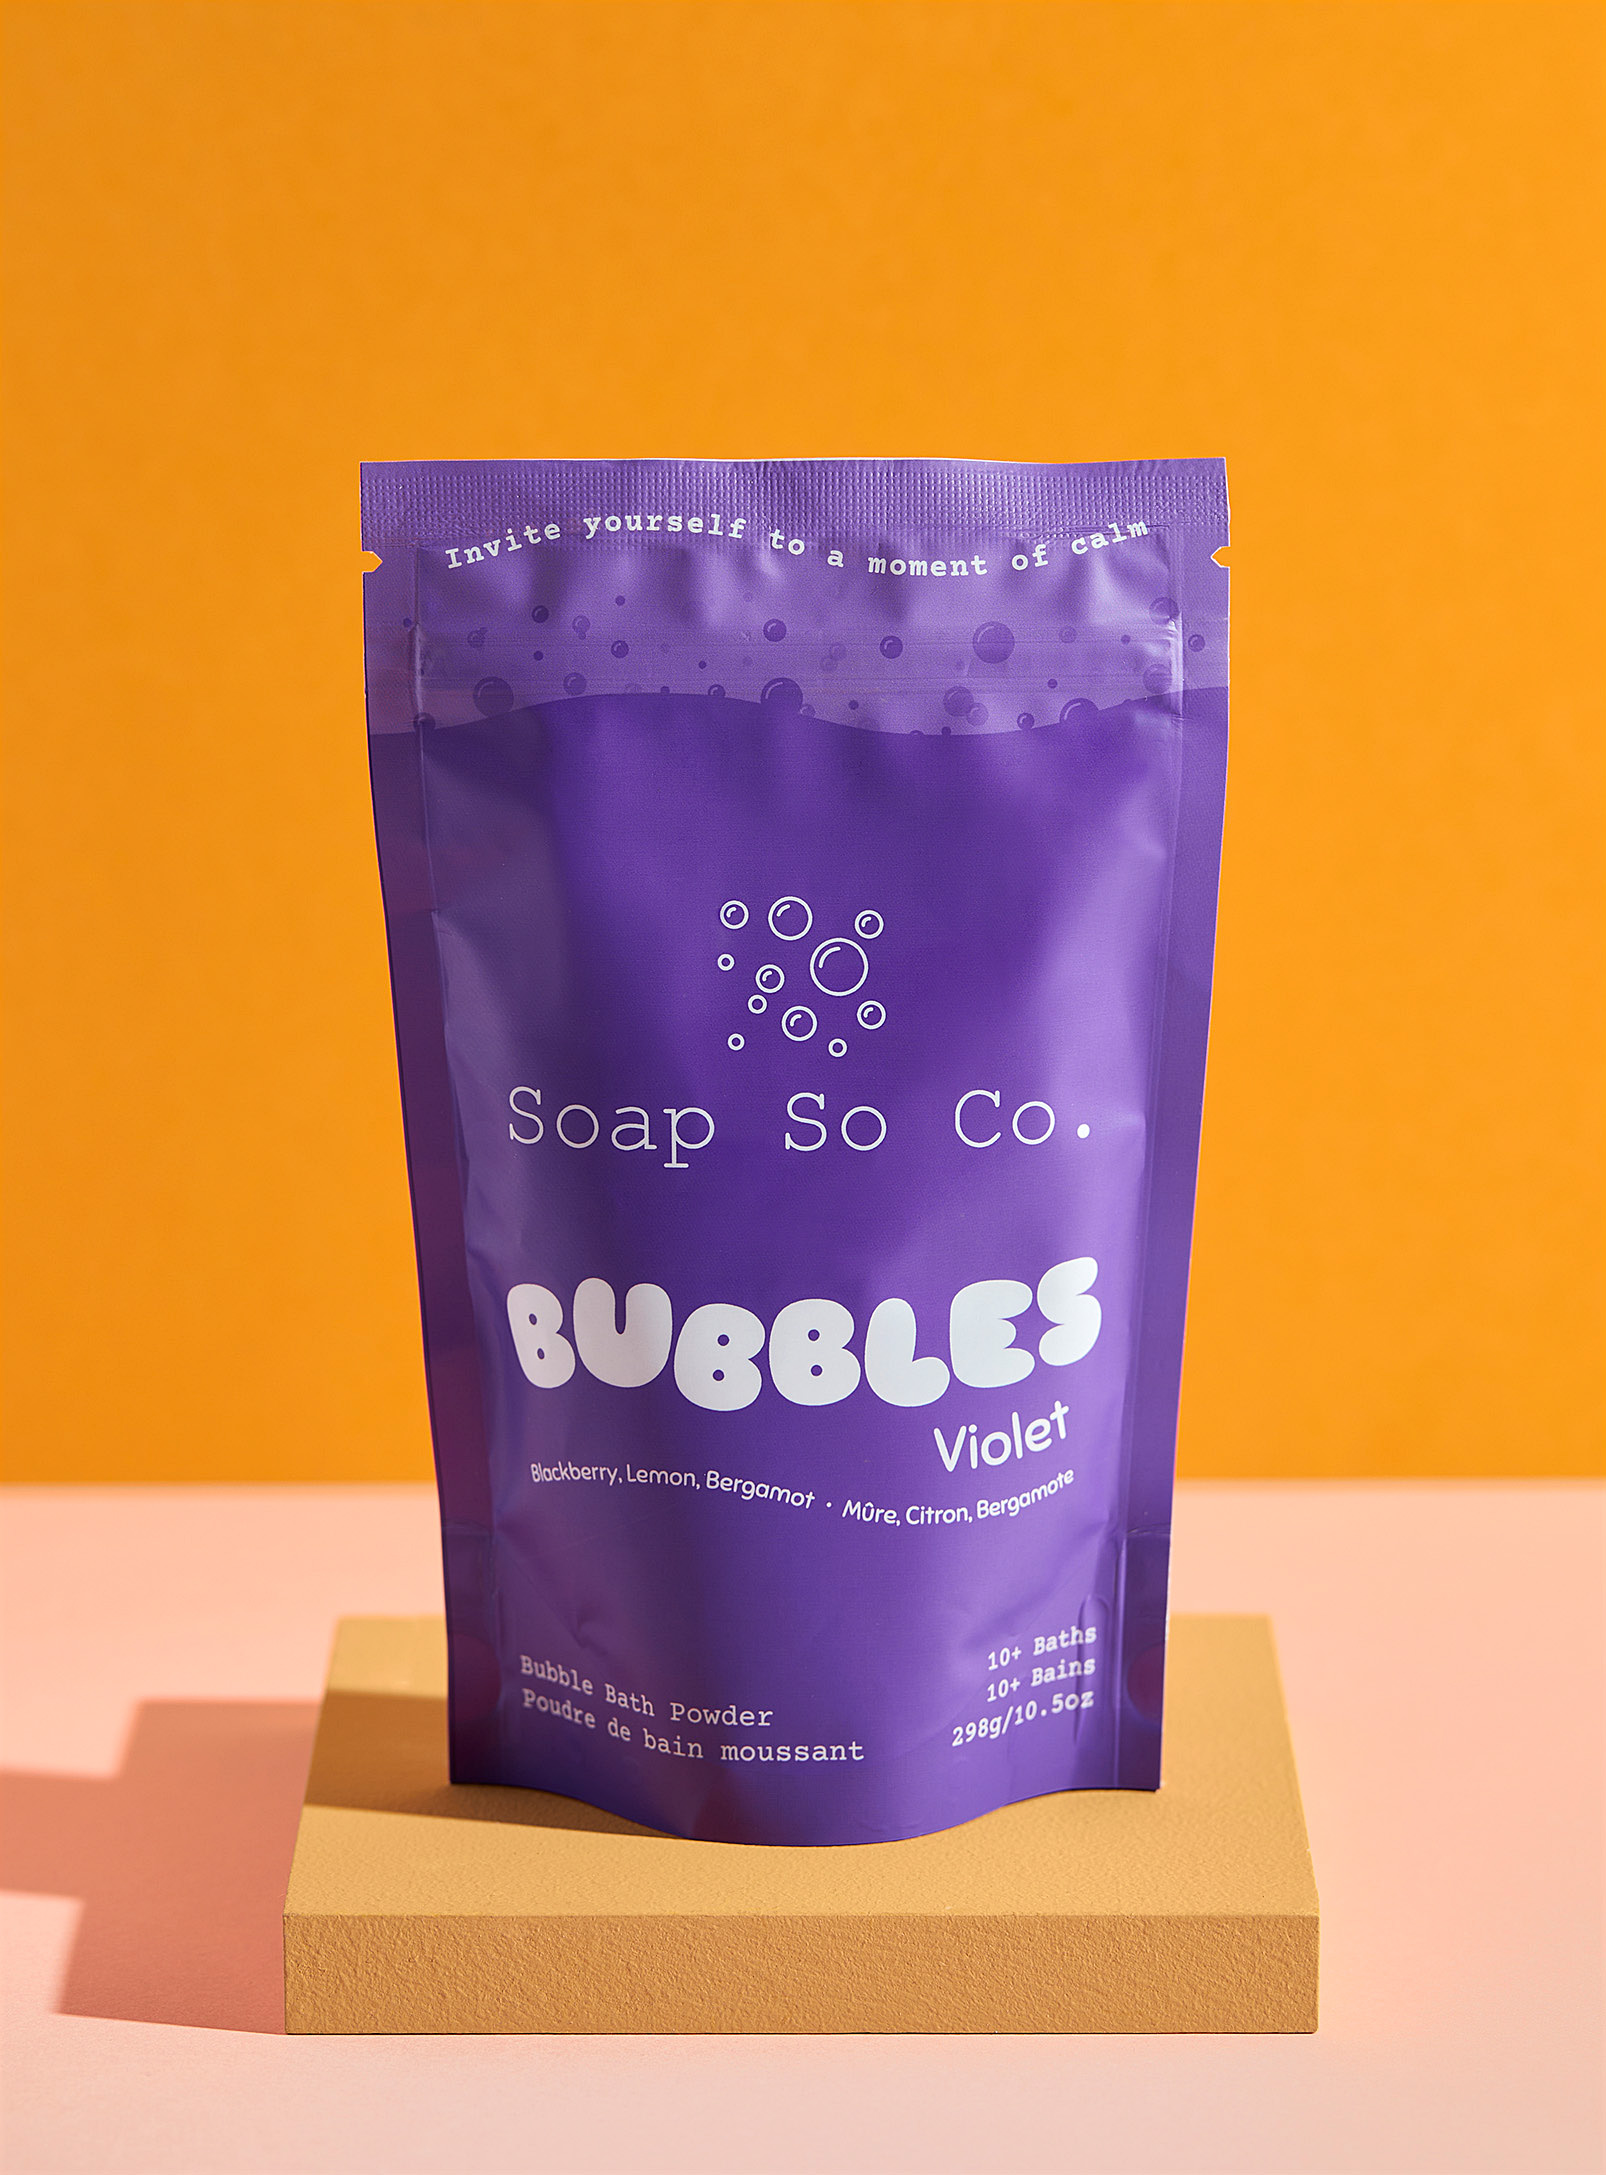 Soap So Co. - Violet bubble bath powder